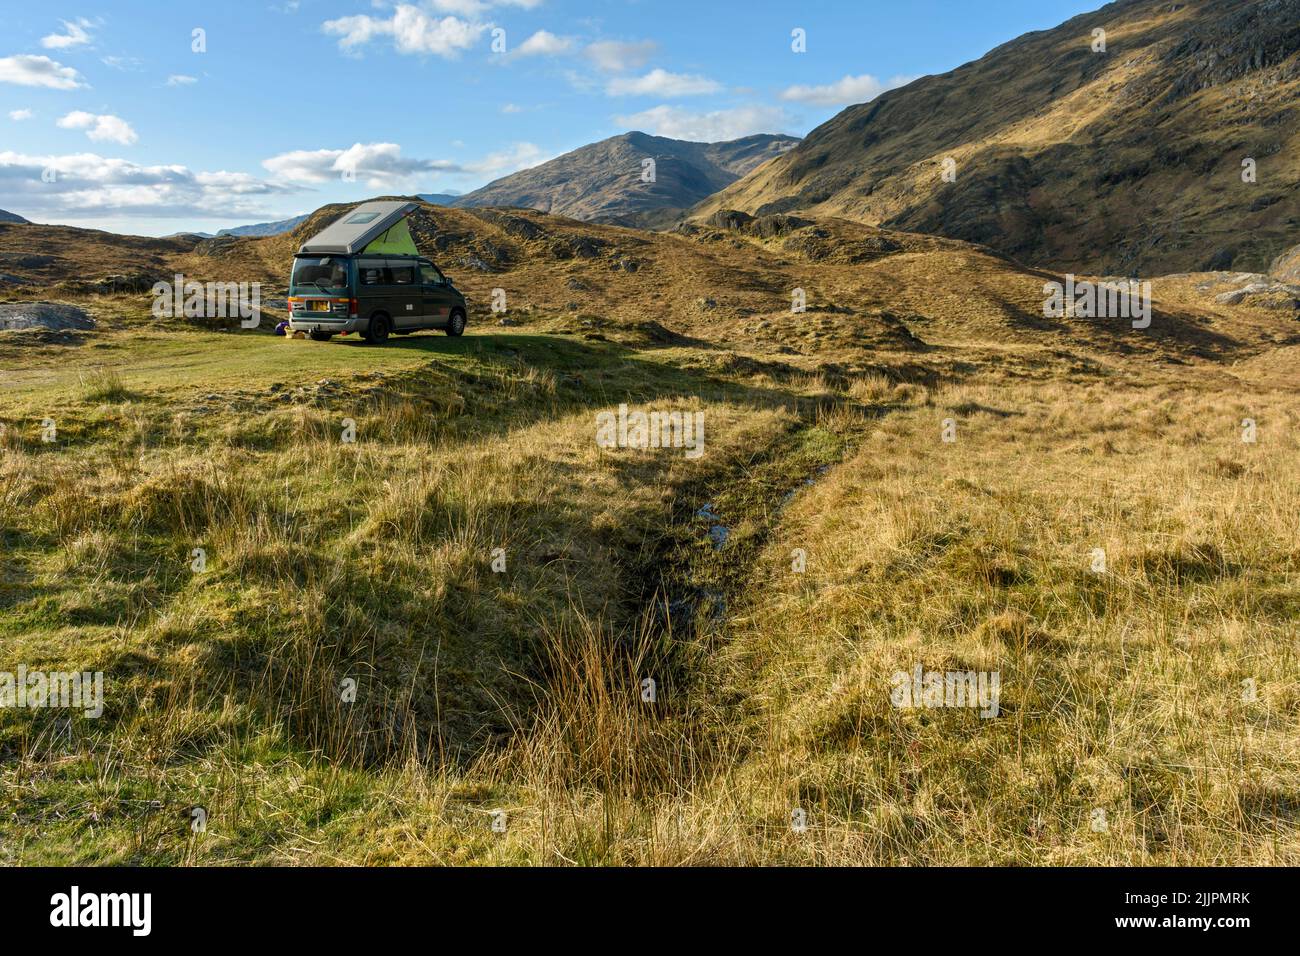 Buidhe Bheinn from near Loch an Doire Duibh, above Kinloch Hourn, Highland Region, Scotland, UK.  Mazda Bongo campervan in foreground. Stock Photo